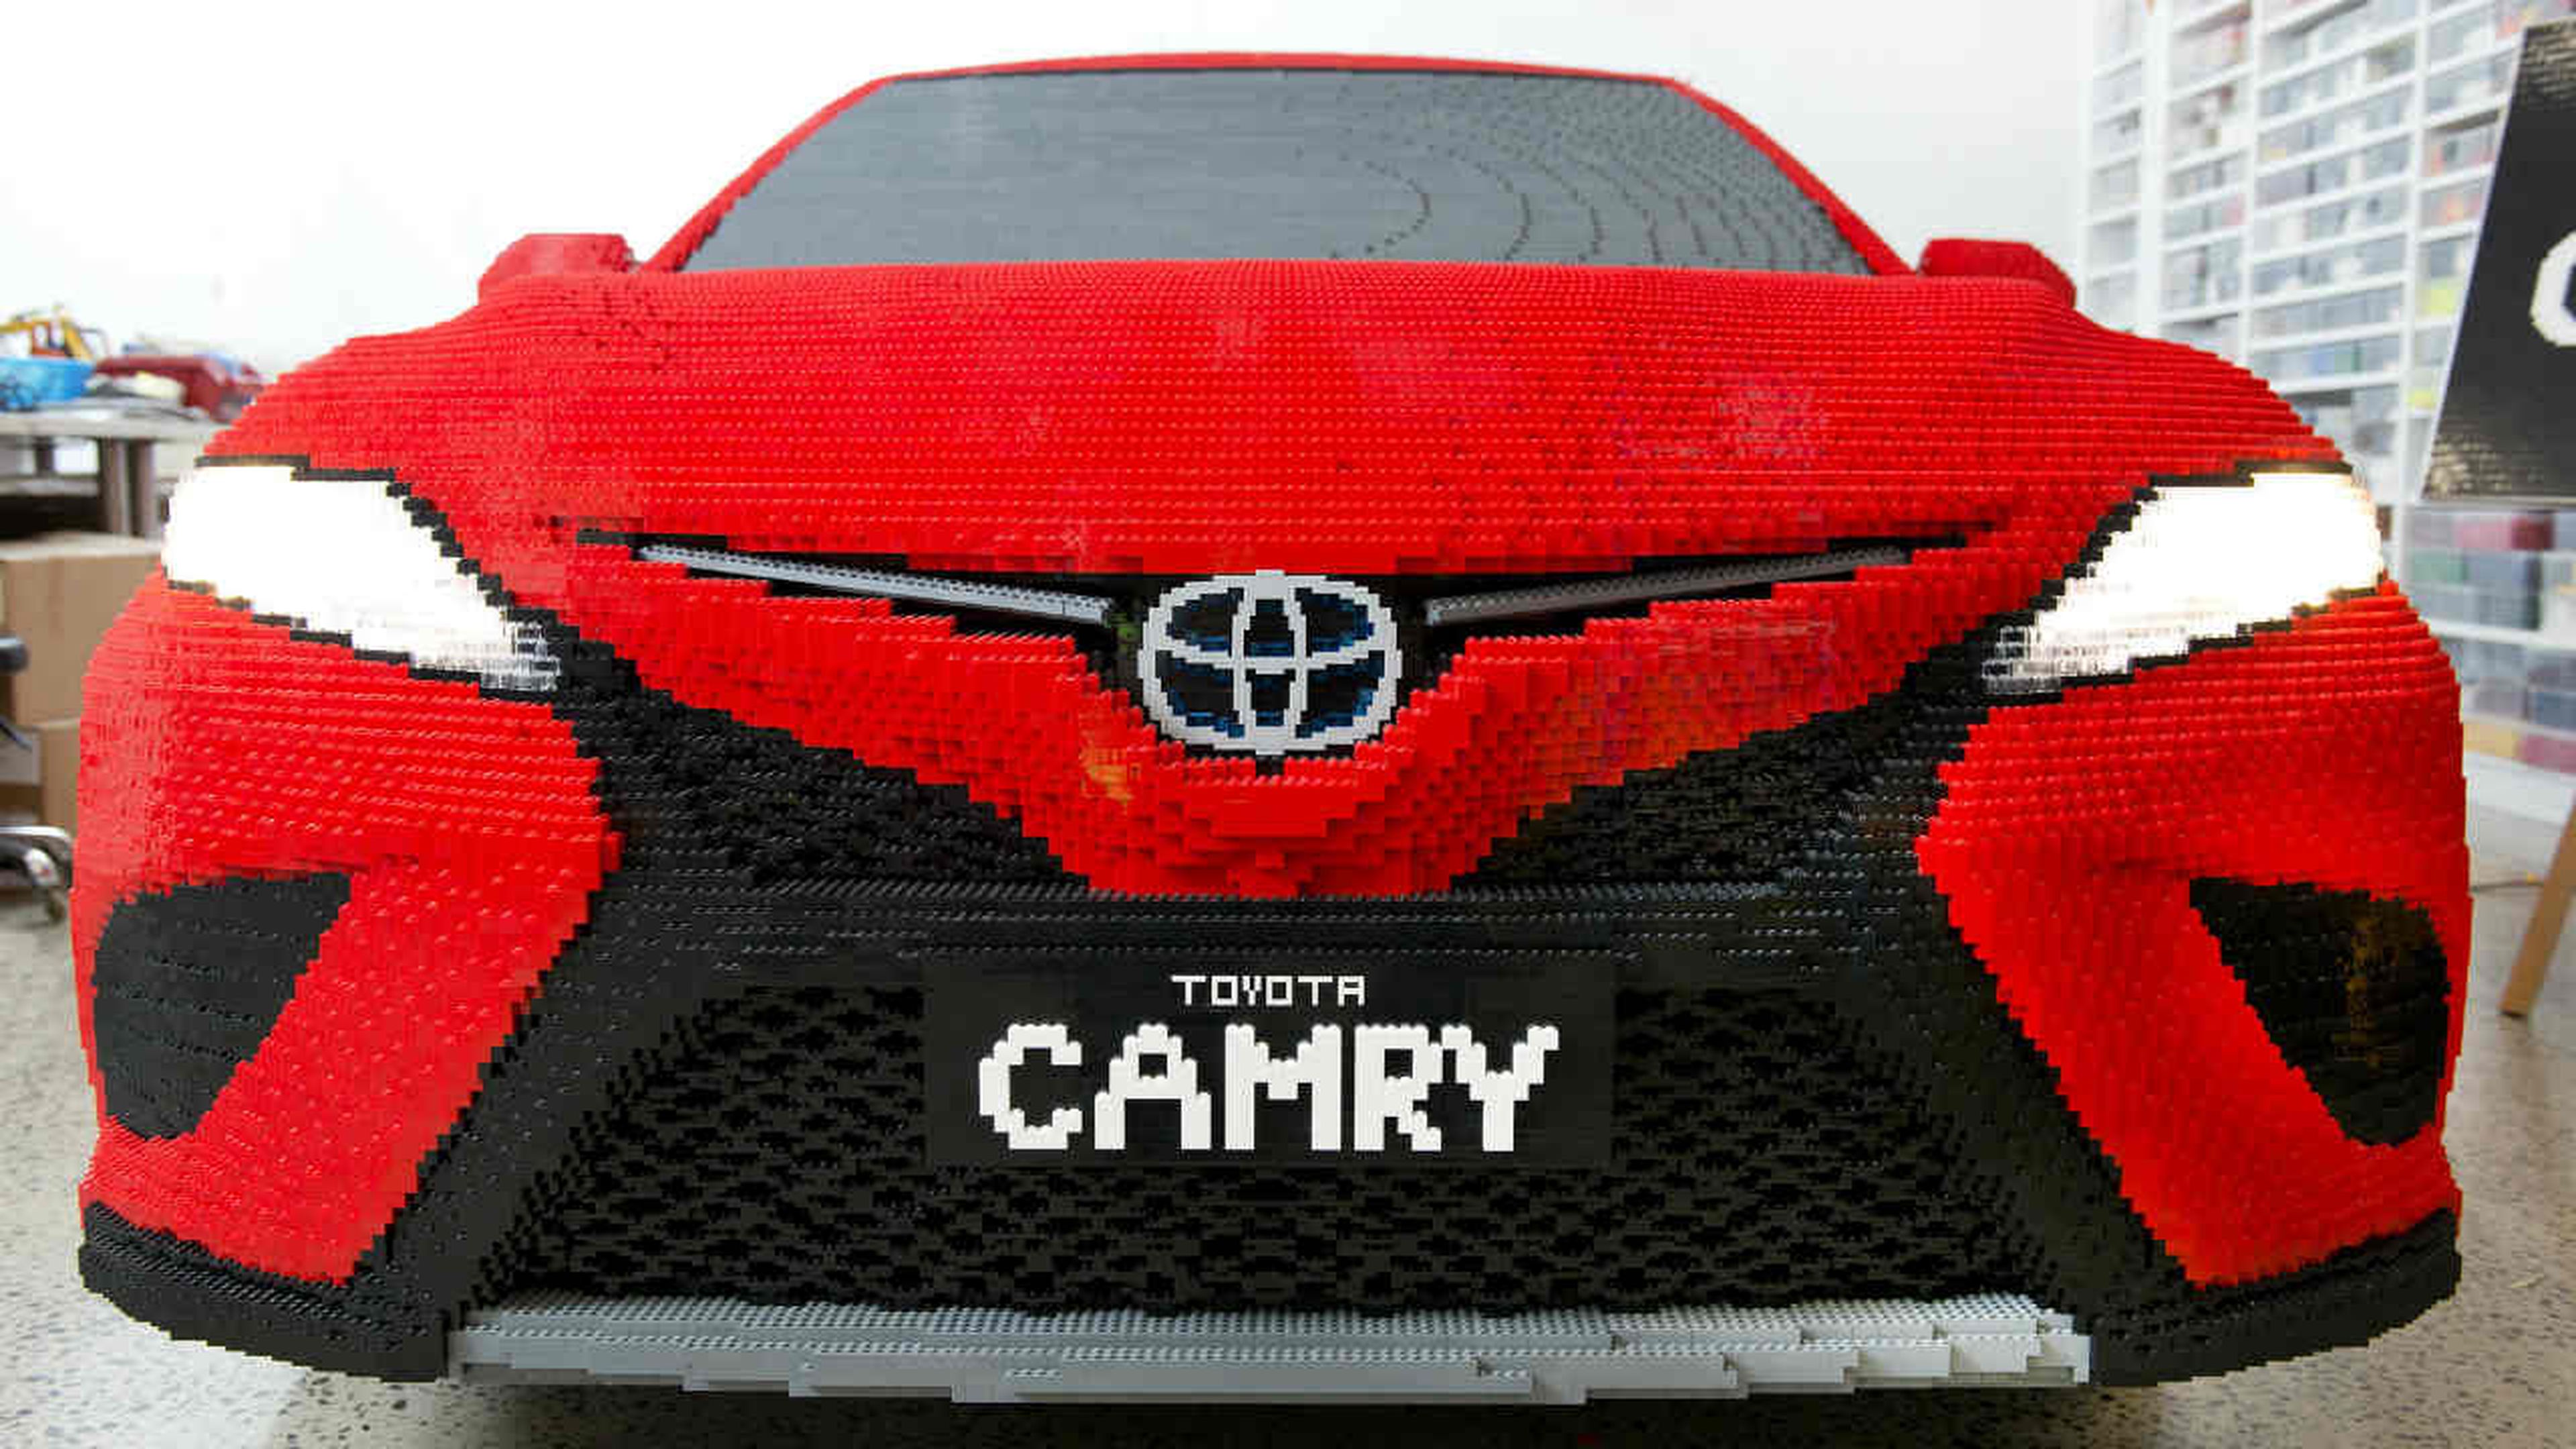 Toyota Camry Lego